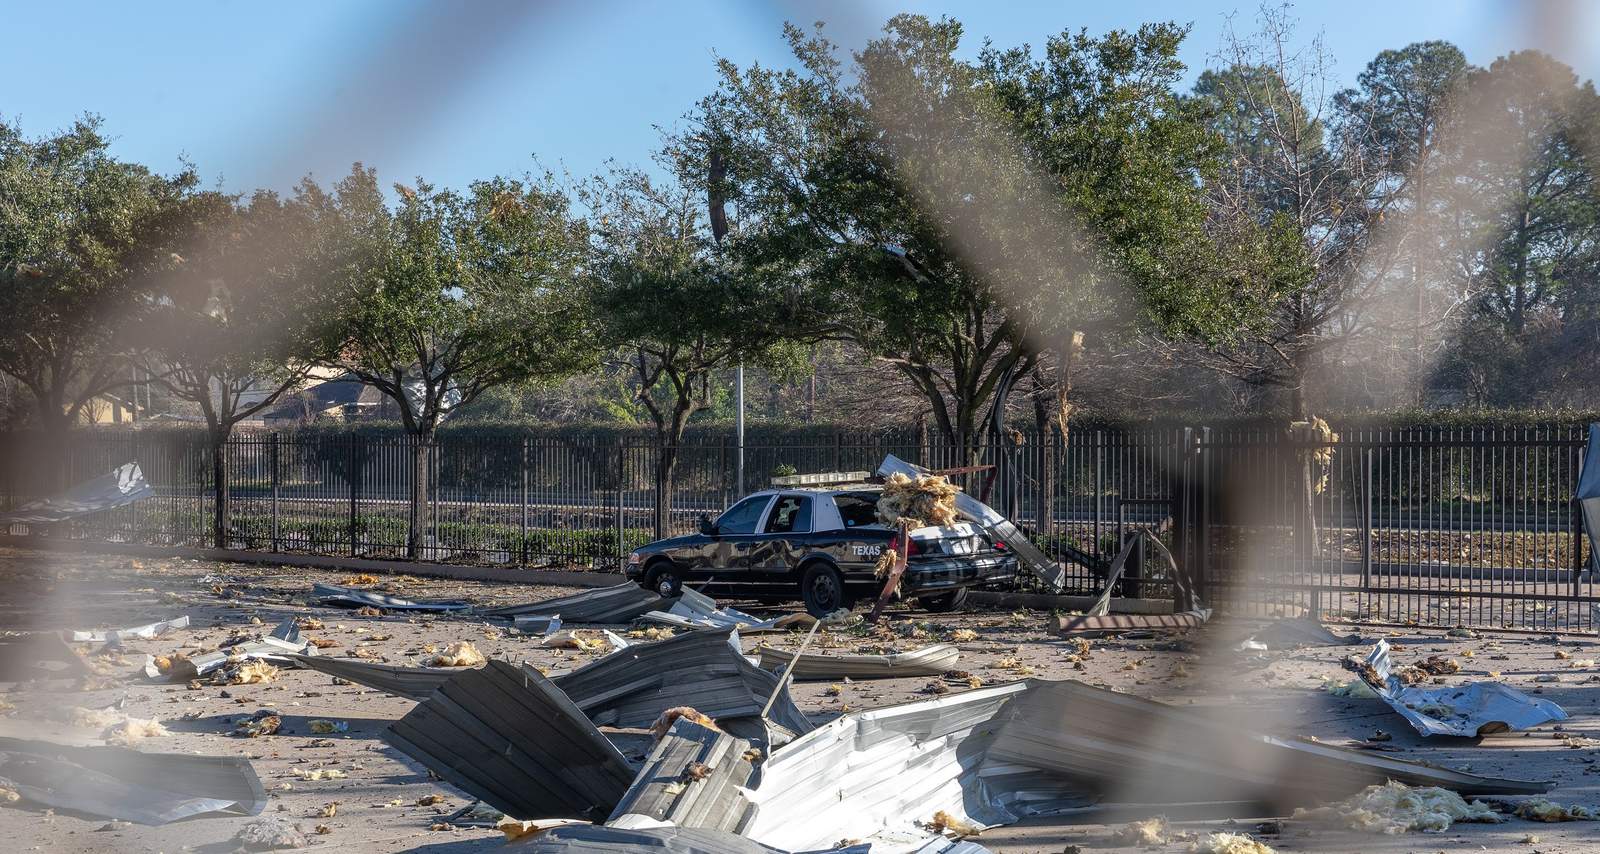 450 structures damaged in northwest Houston explosion last week, HFD says